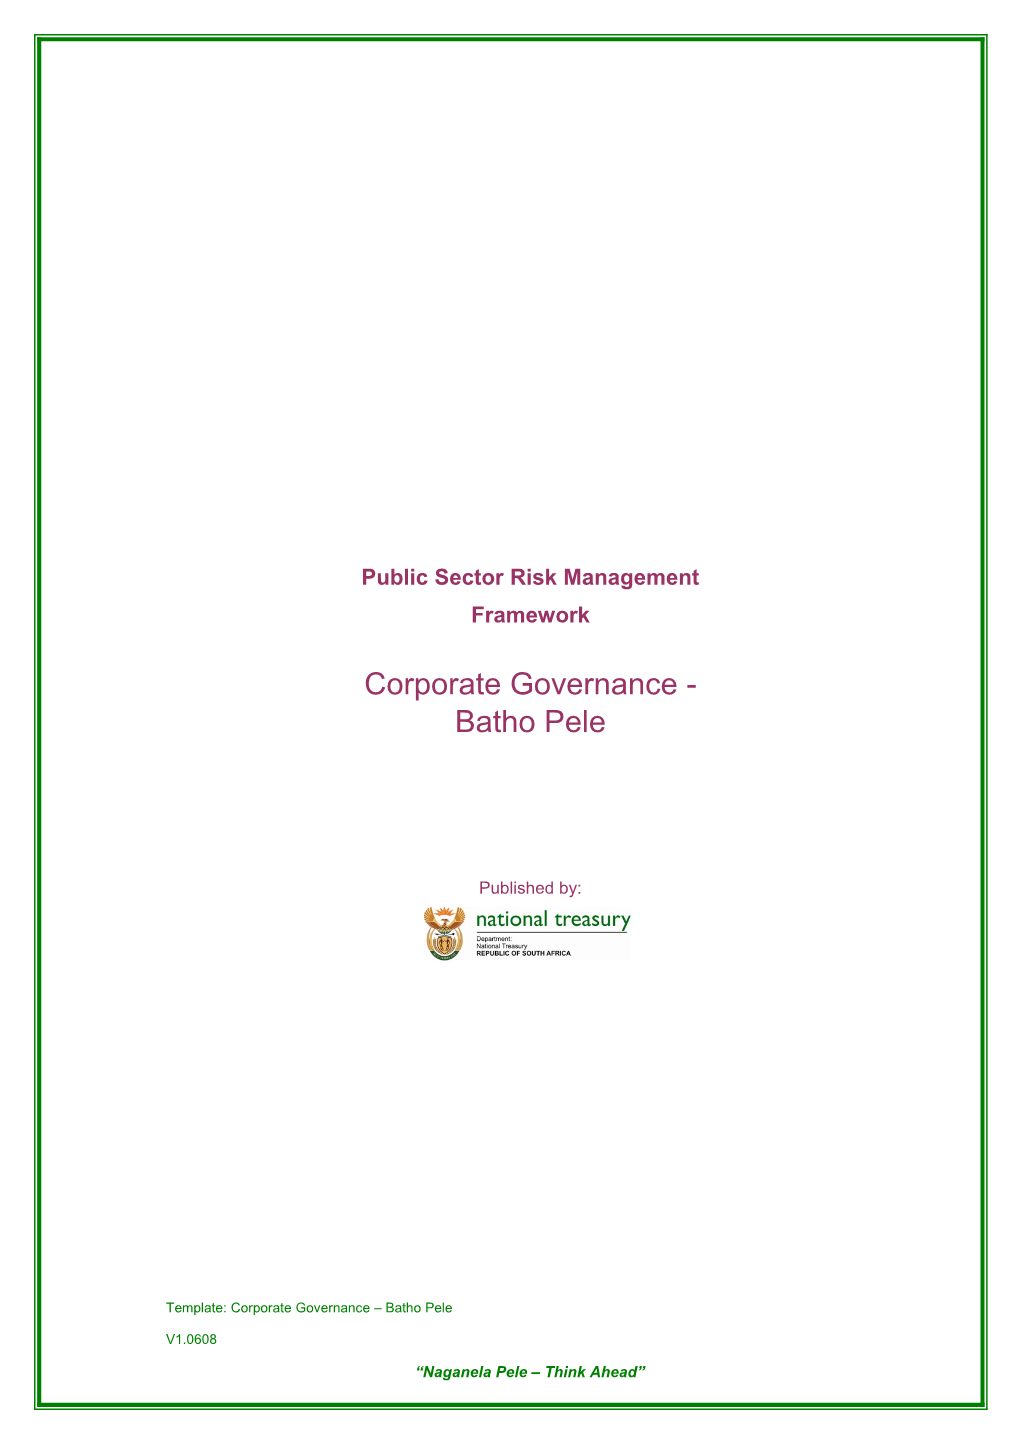 Corporate Governance - Batho Pele